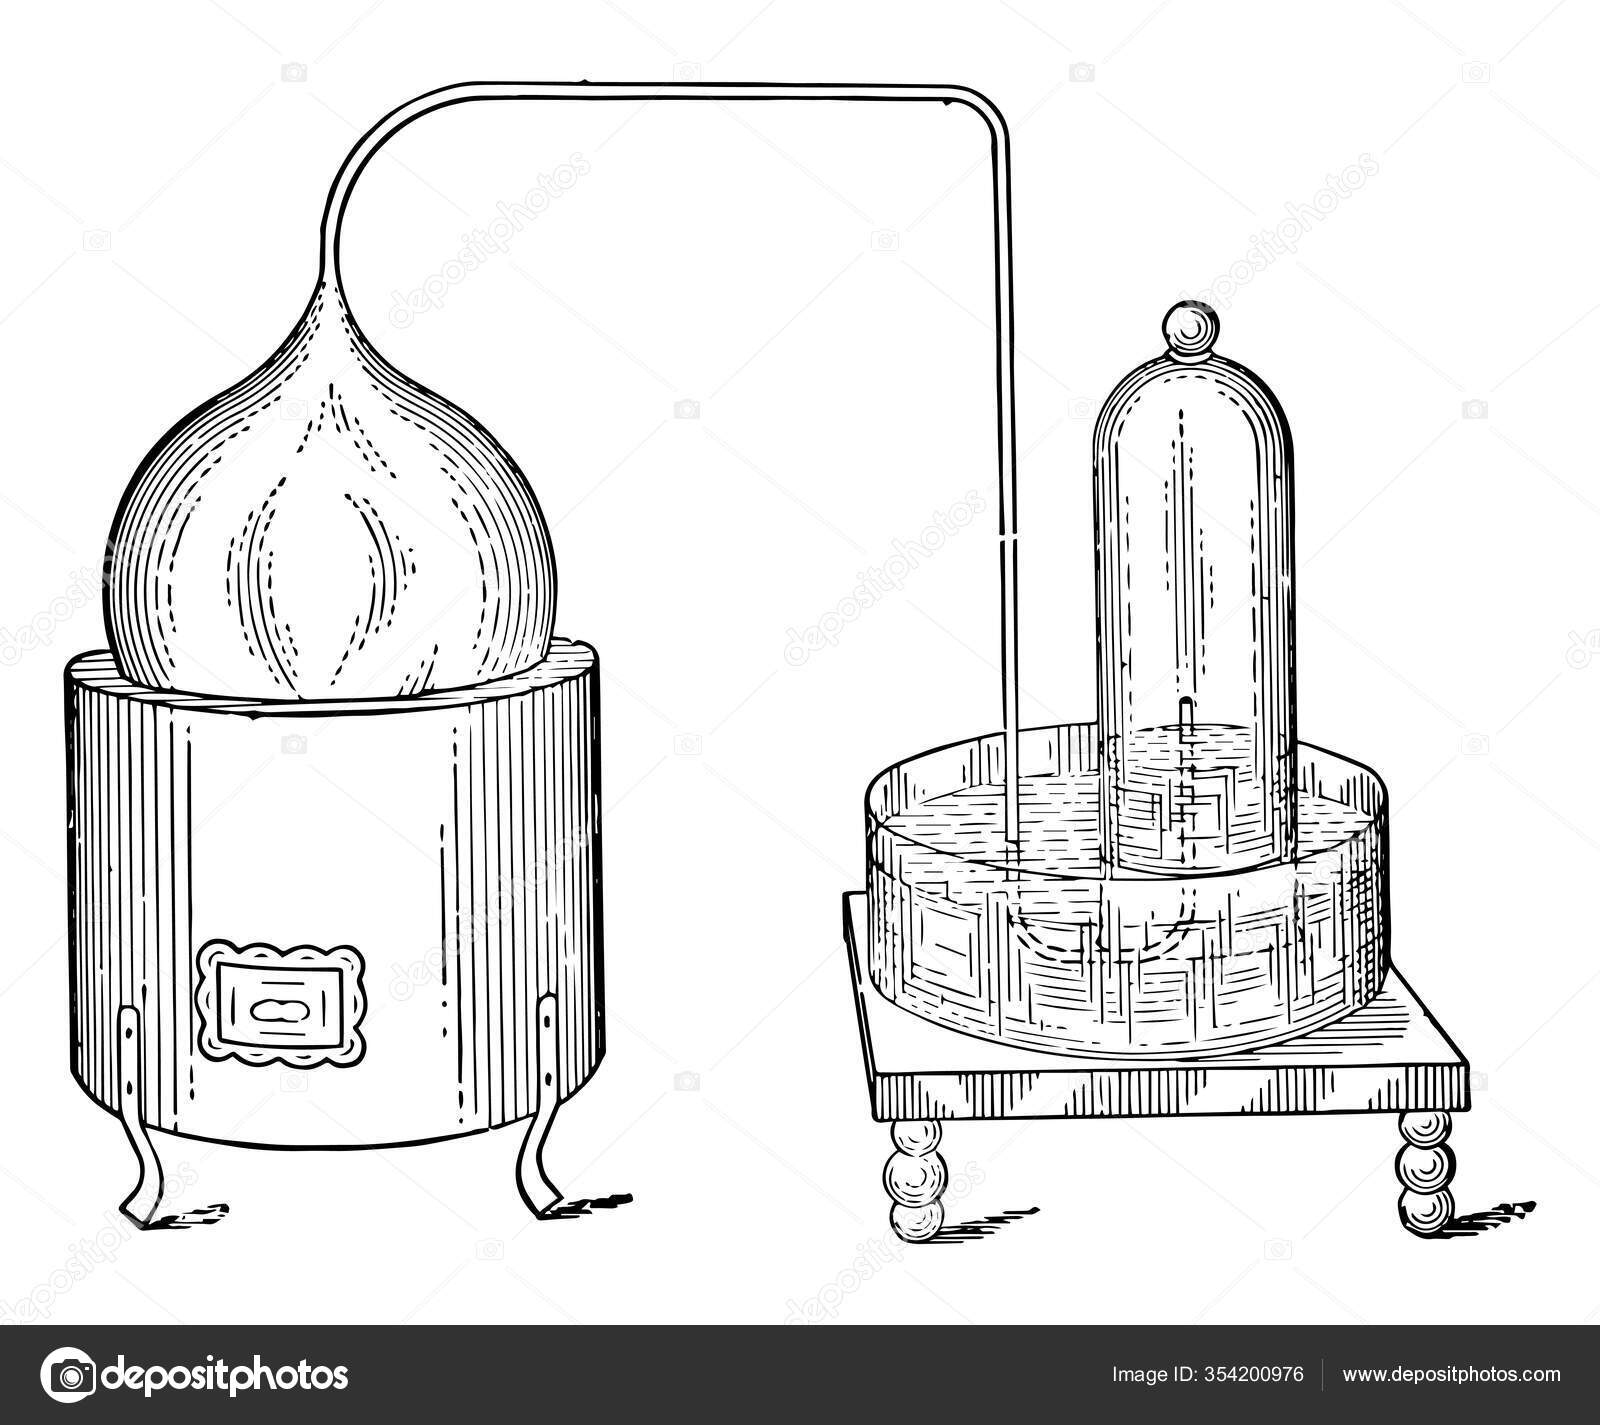 Montaje usado por Lavoisier para calentar mercurio. 39